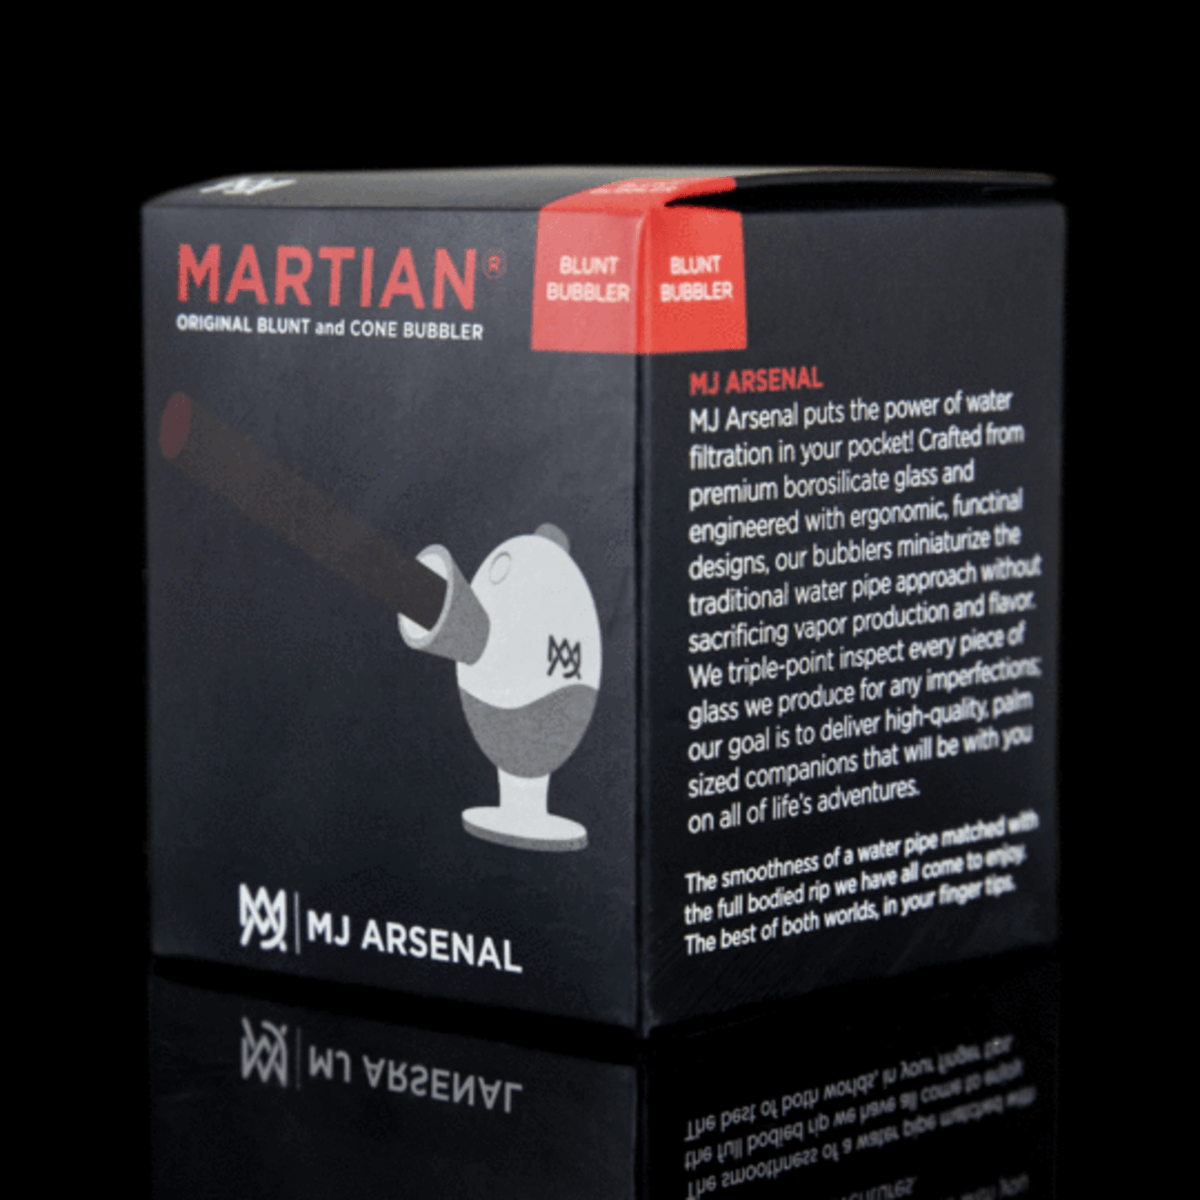 MJ Arsenal Glass MJ Arsenal "The Martian" Rollie Bubbler